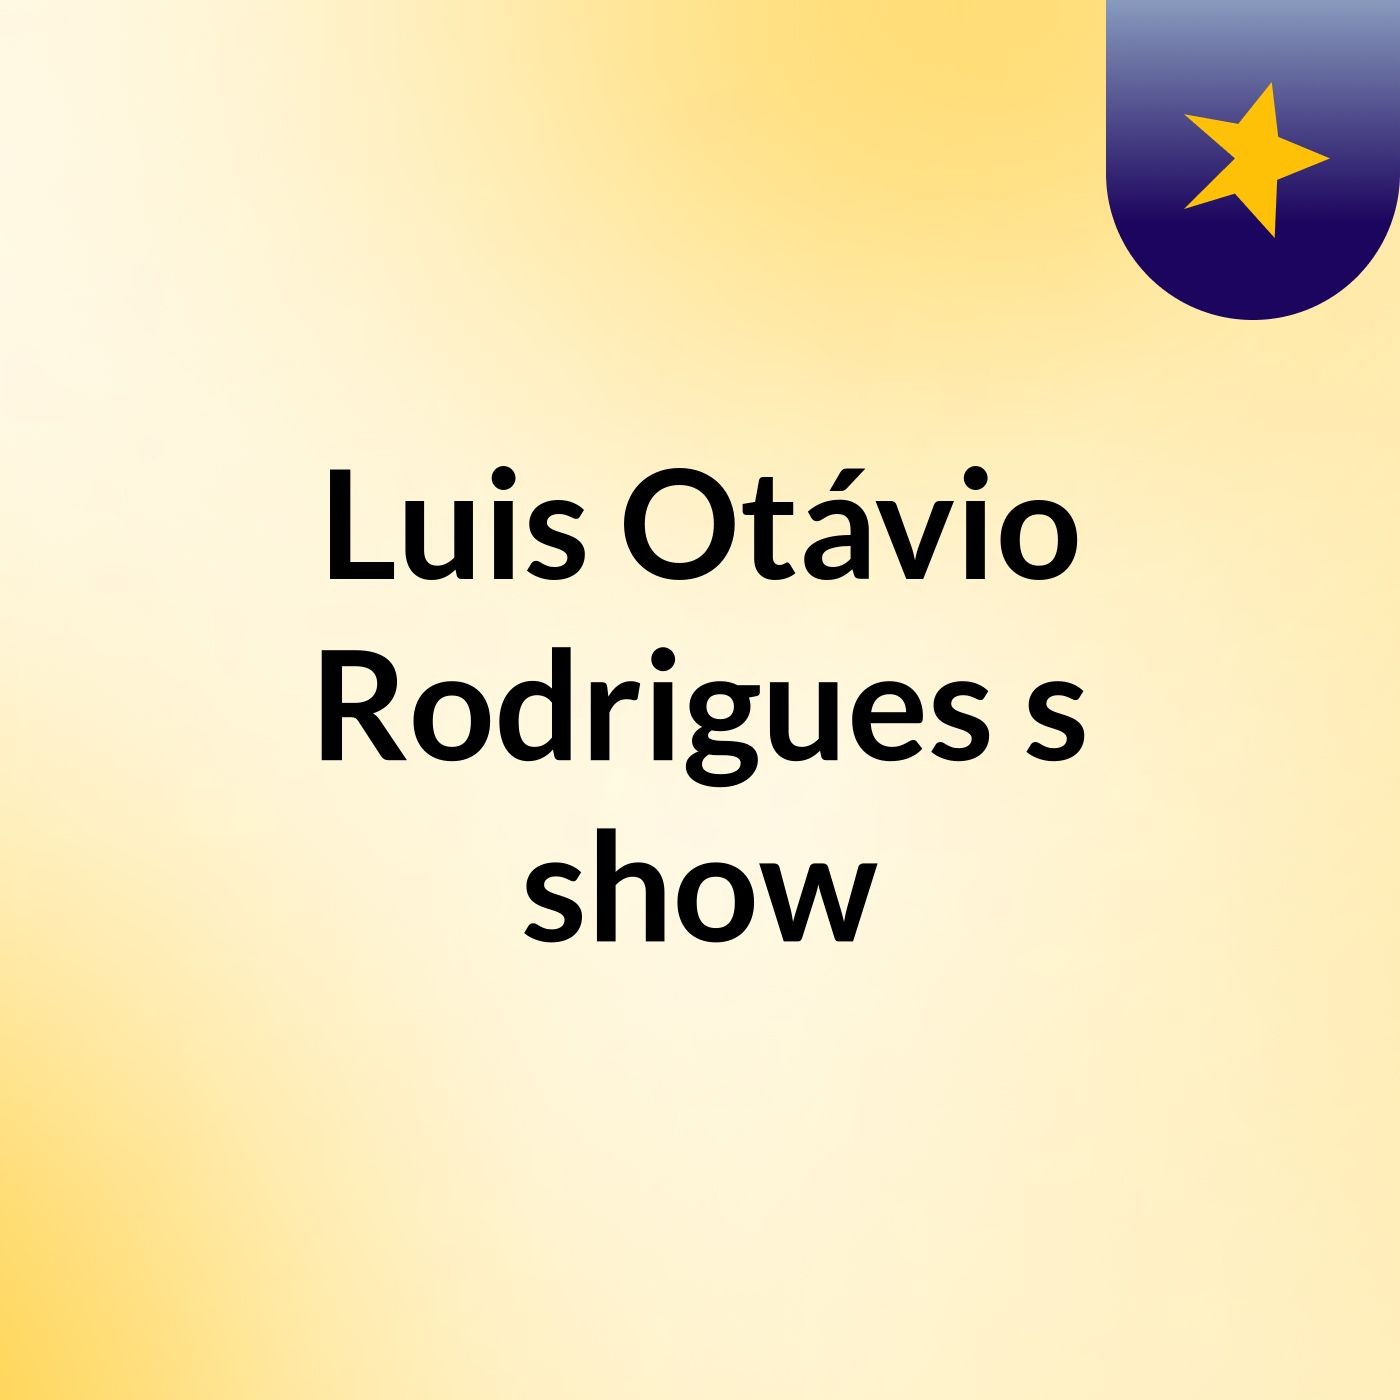 Luis Otávio Rodrigues's show